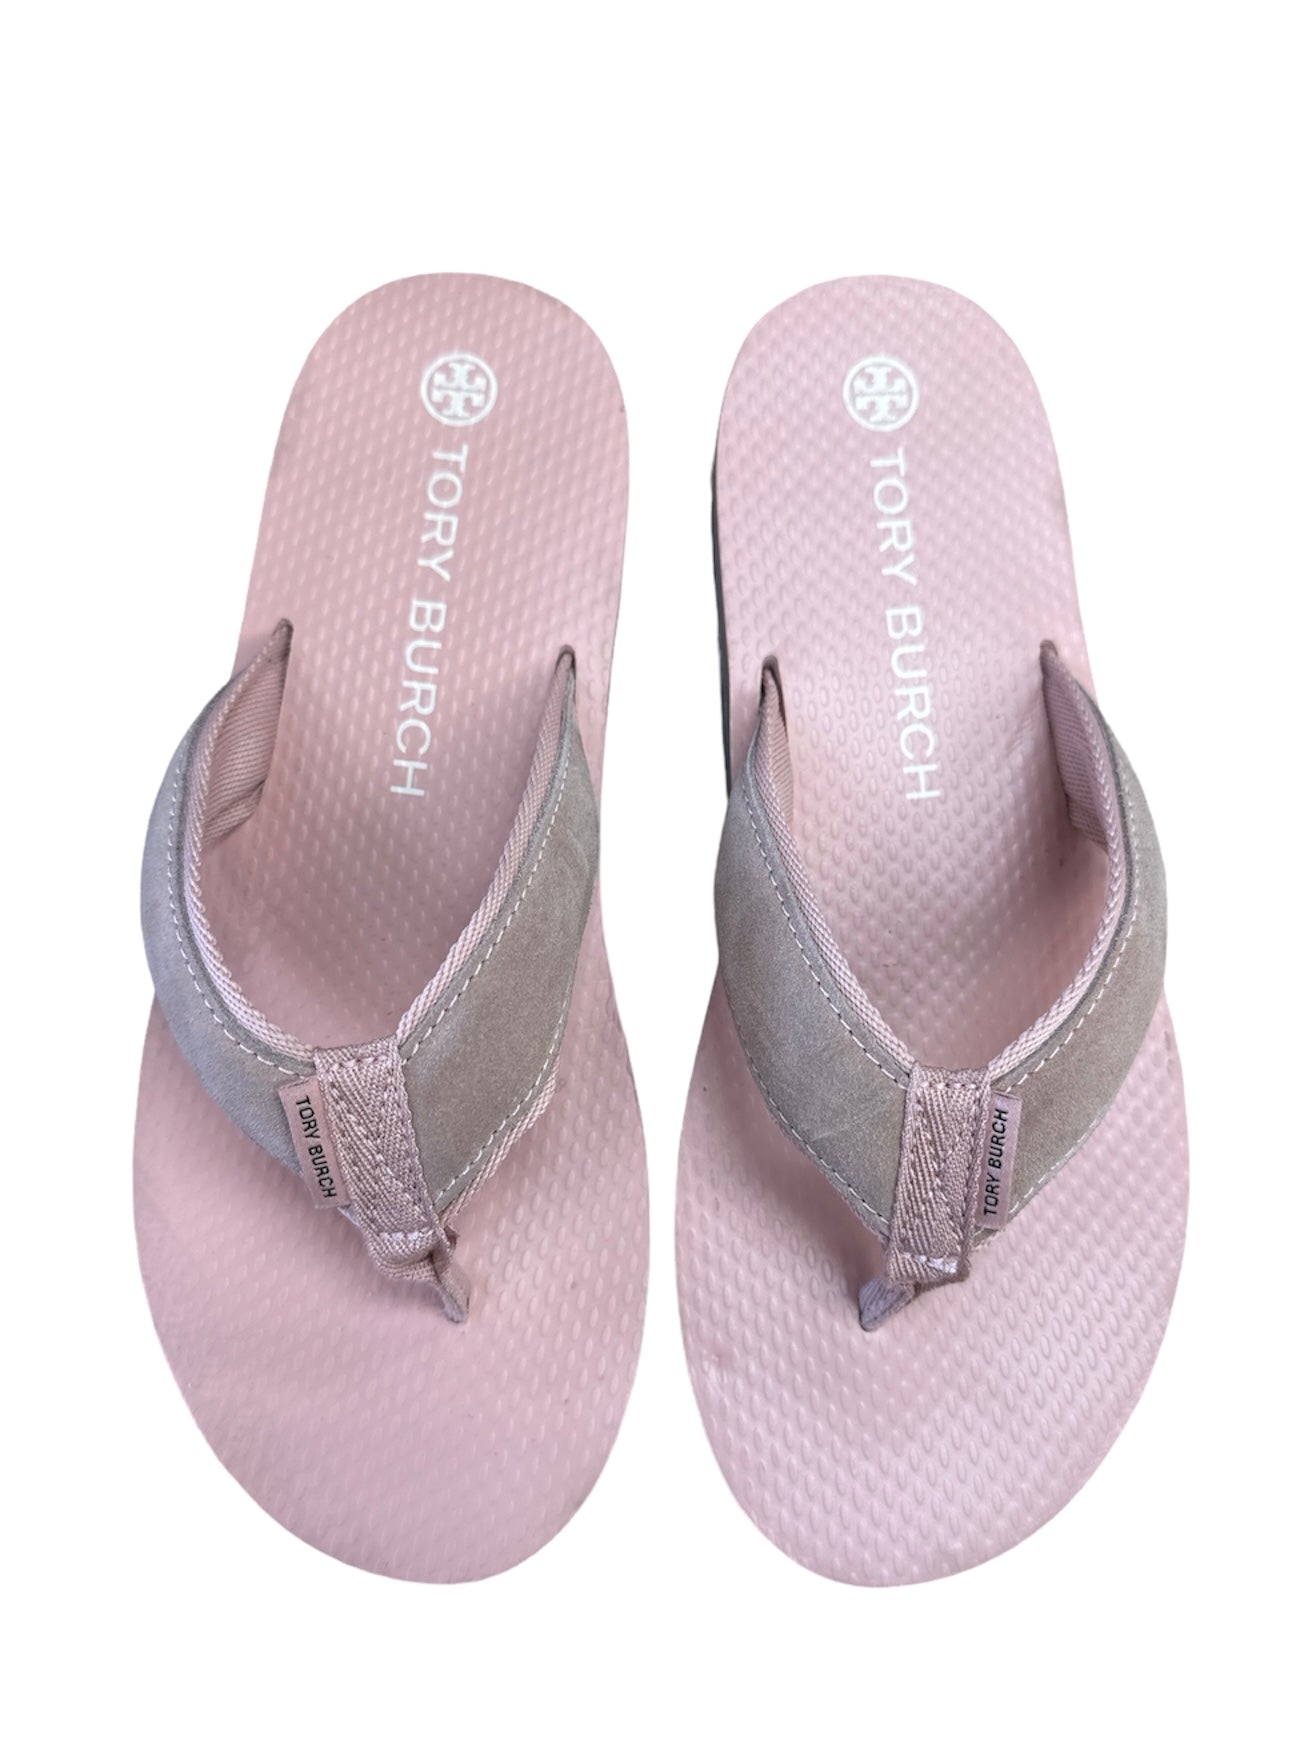 Pink Sandals Flats Tory Burch, Size 9